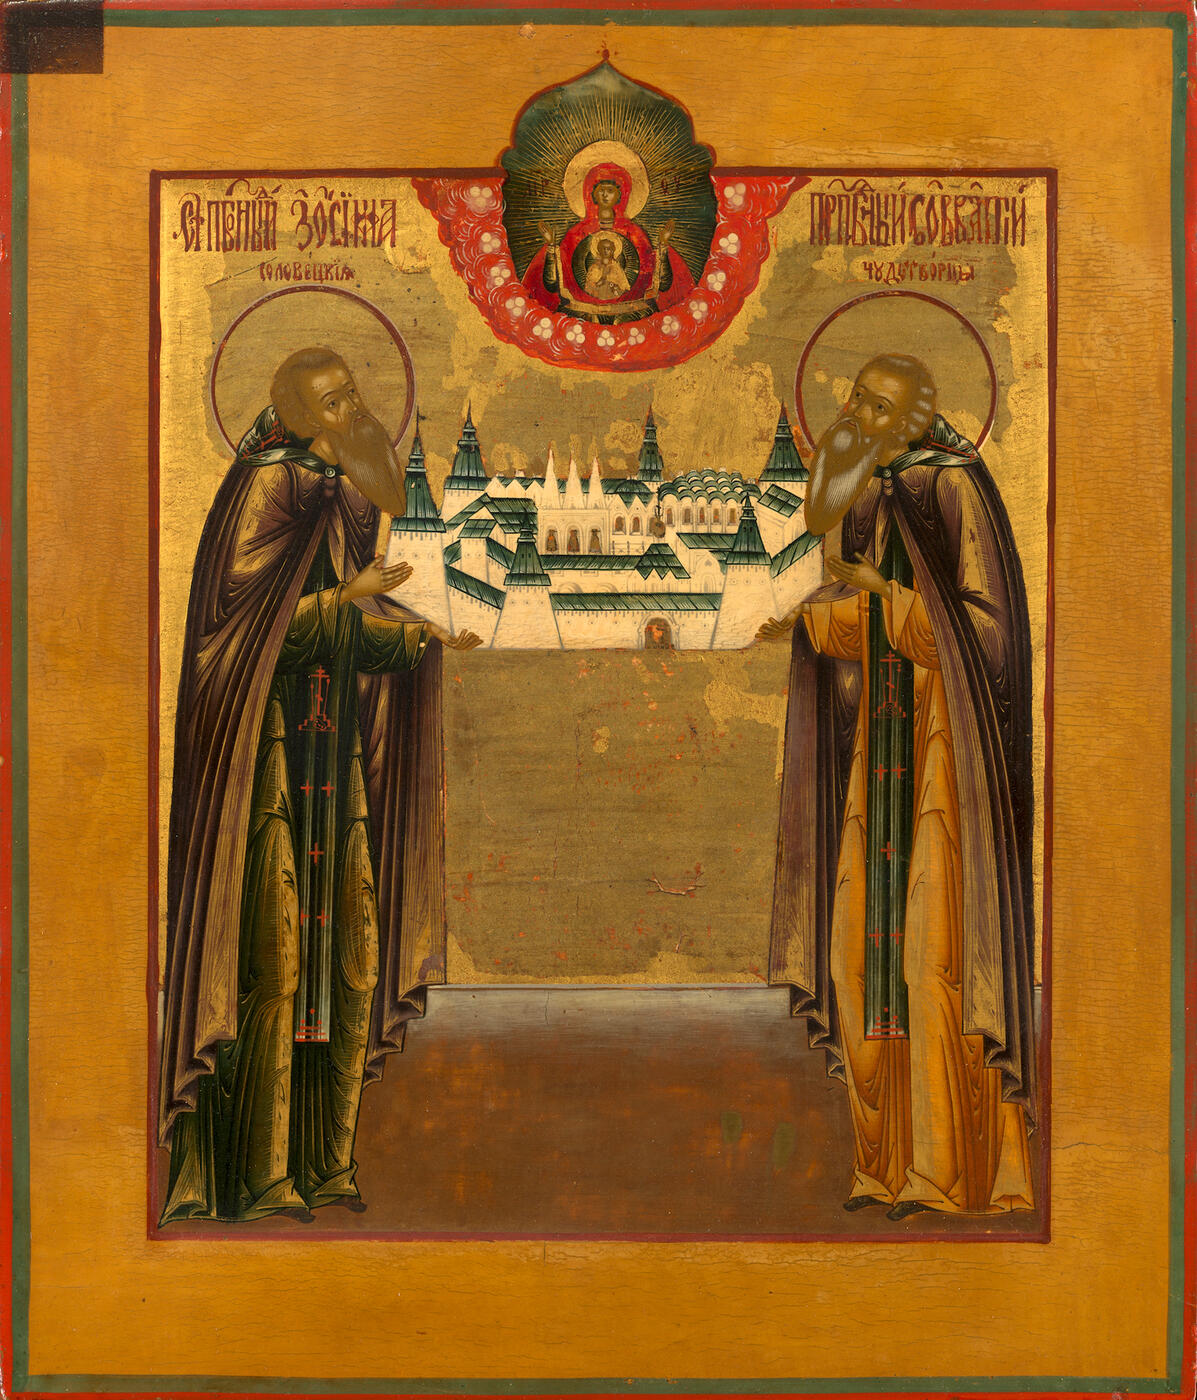 Saints Zosima and Savvatiy of Solovki